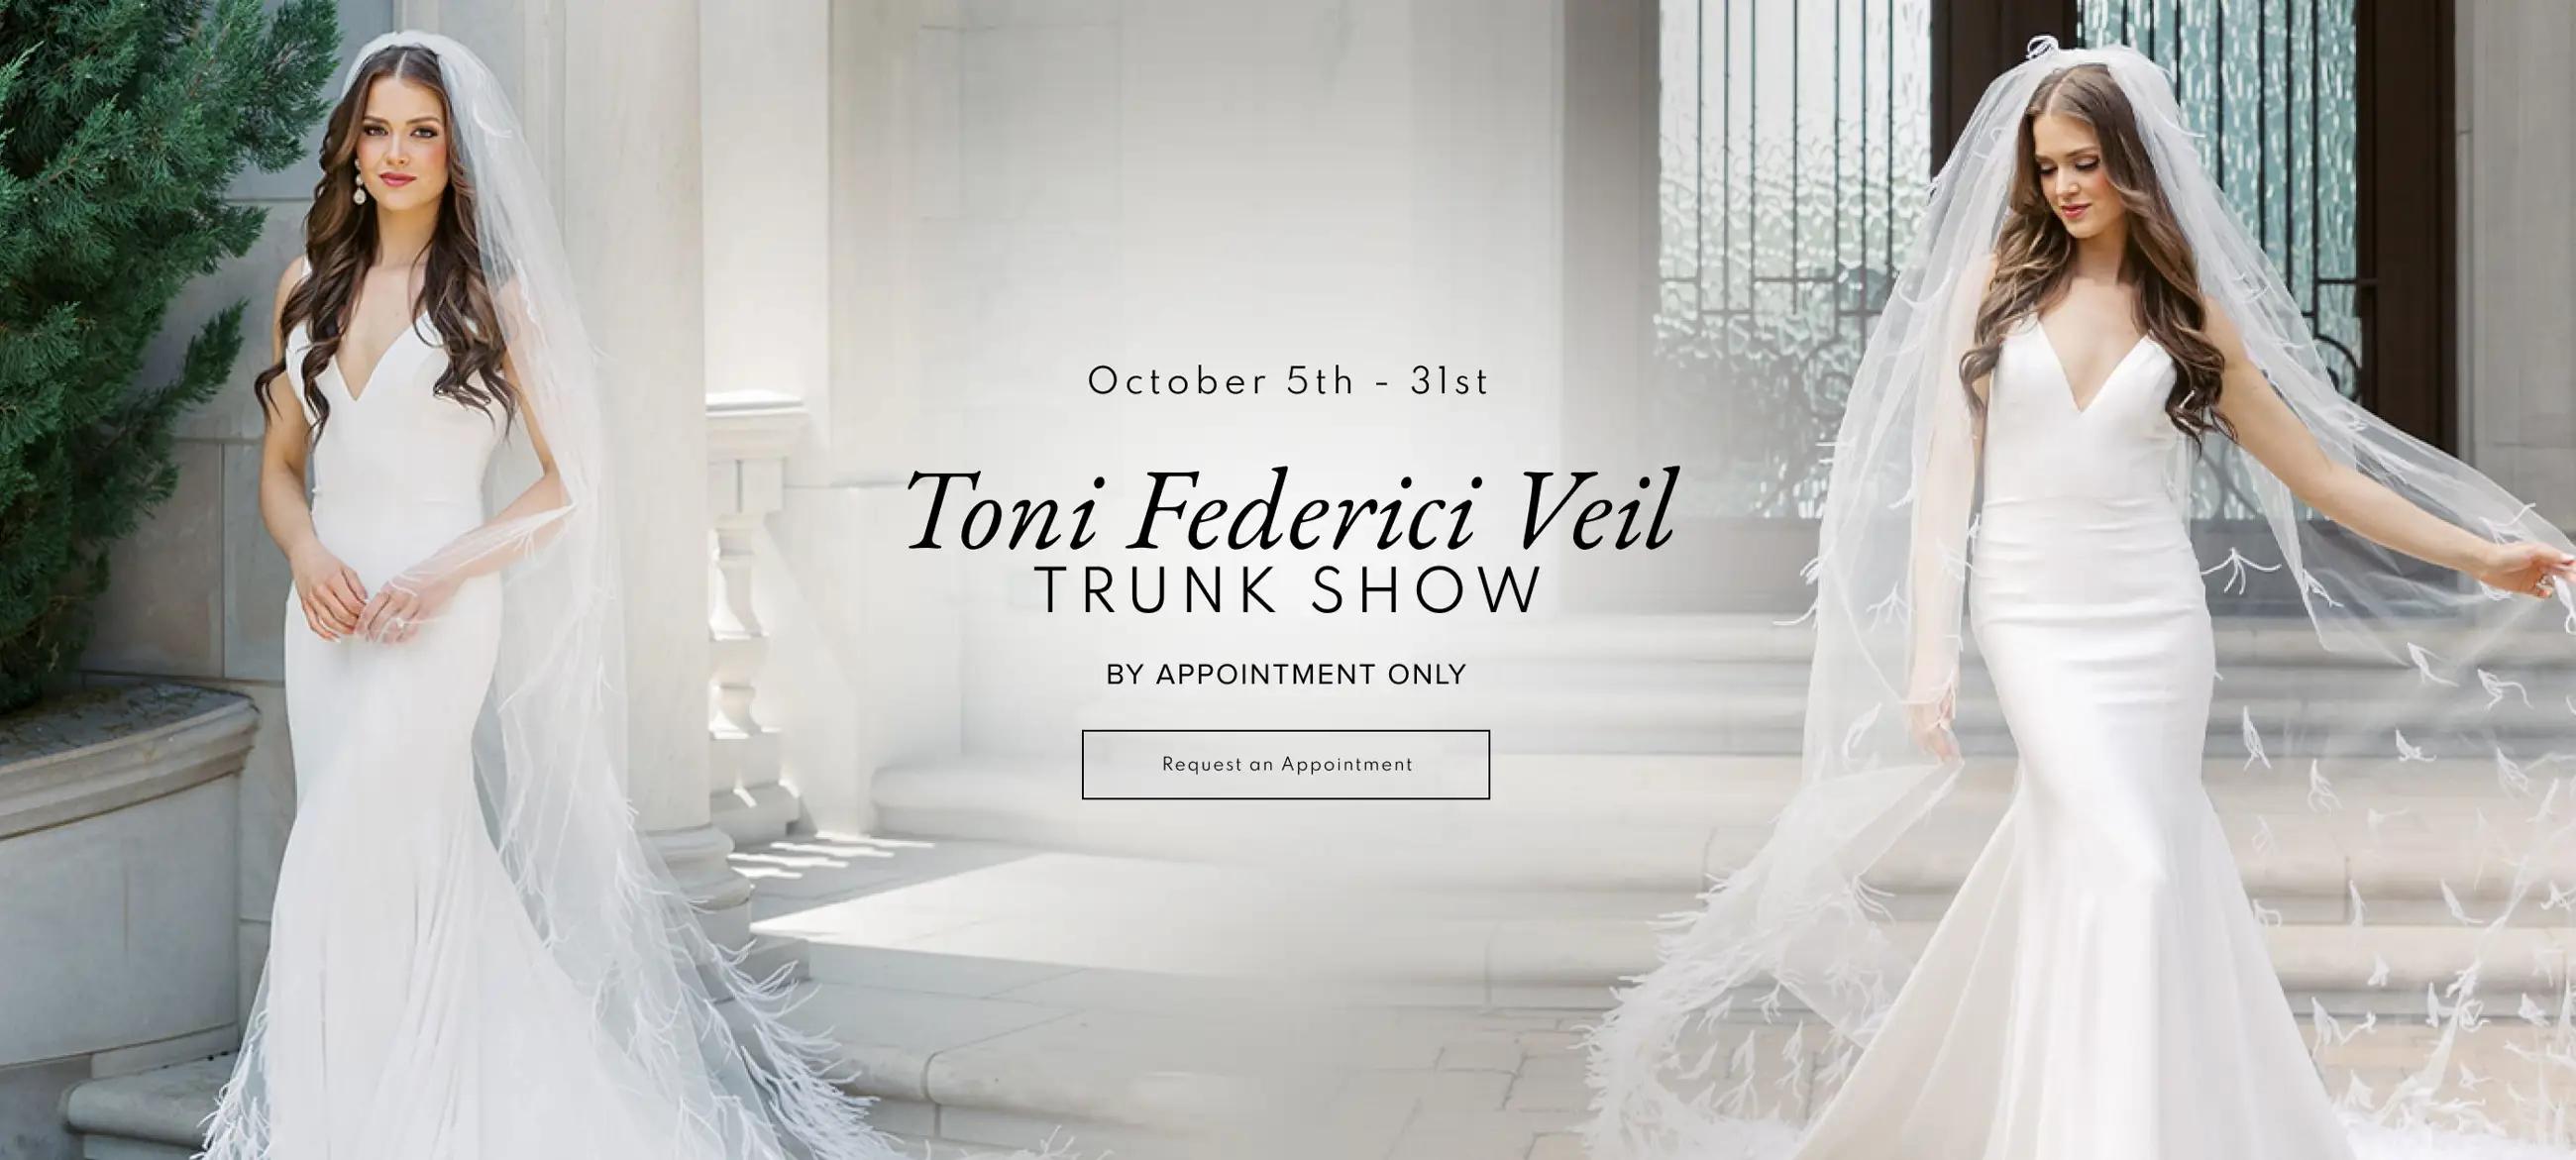 Toni Federici Veil Trunk Show Banner Desktop